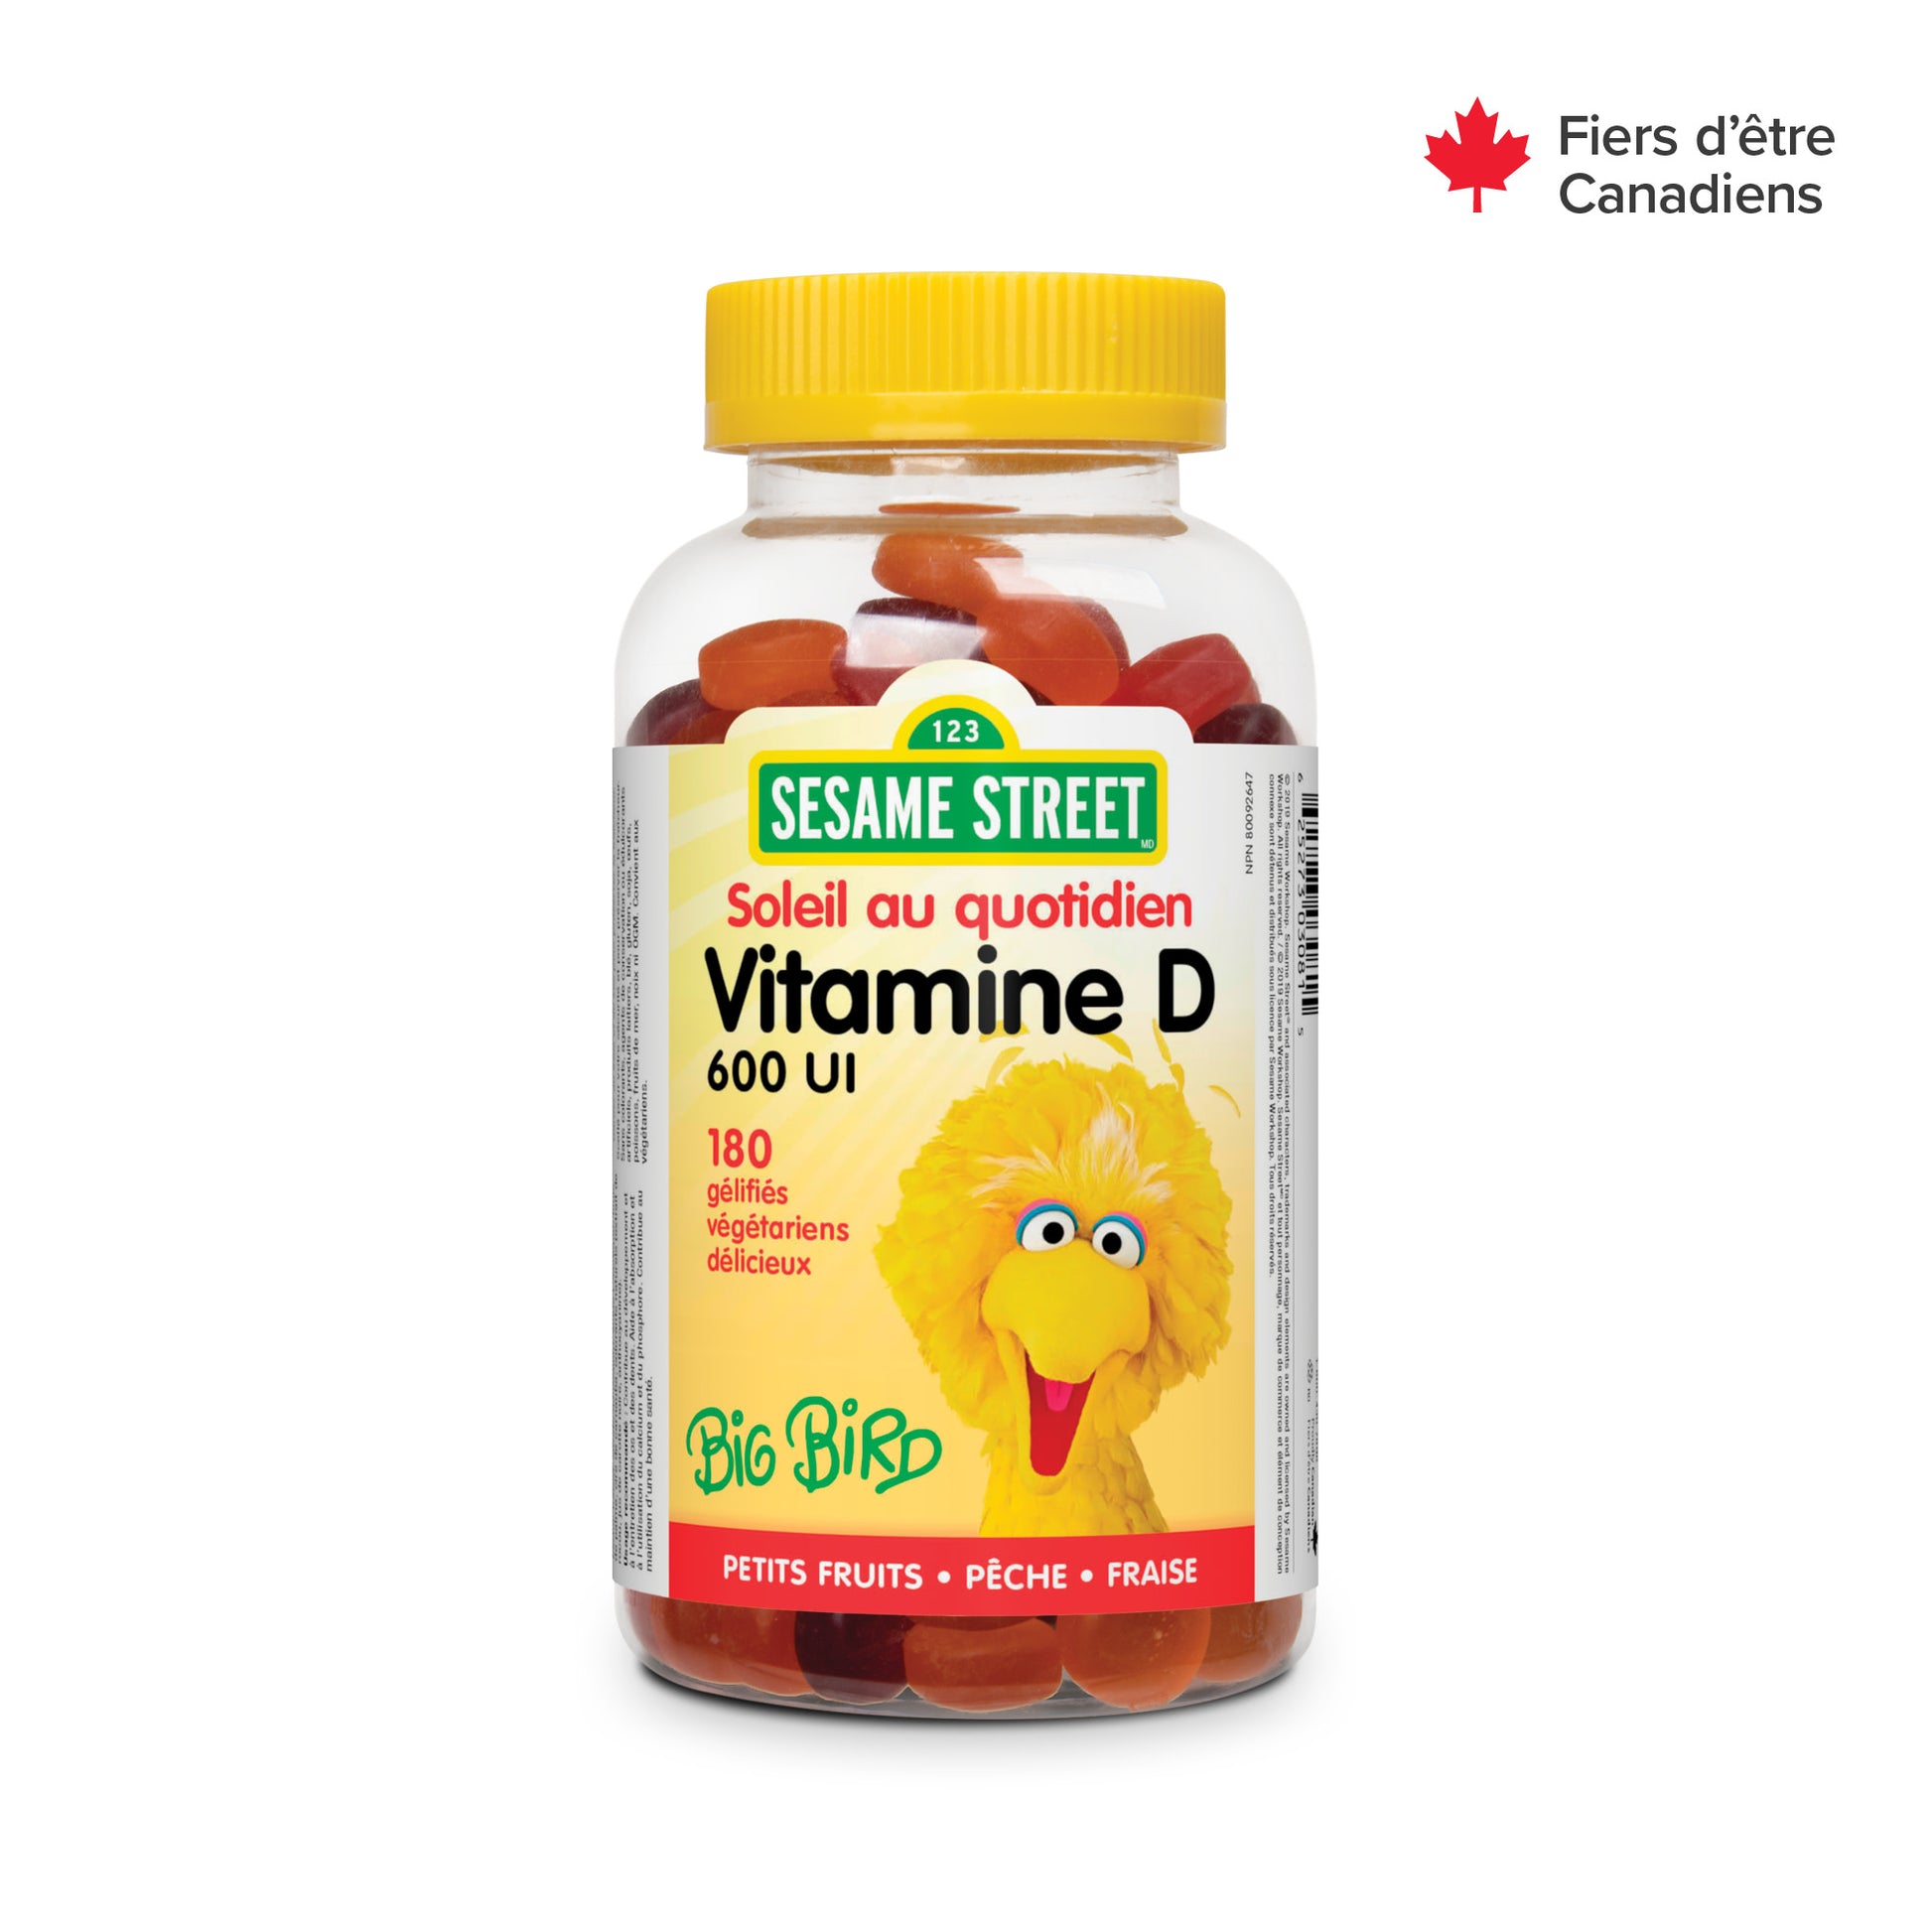 Vitamine D3 600 UI petits fruits • pêche • fraise for Sesame Street®|v|hi-res|WN3081